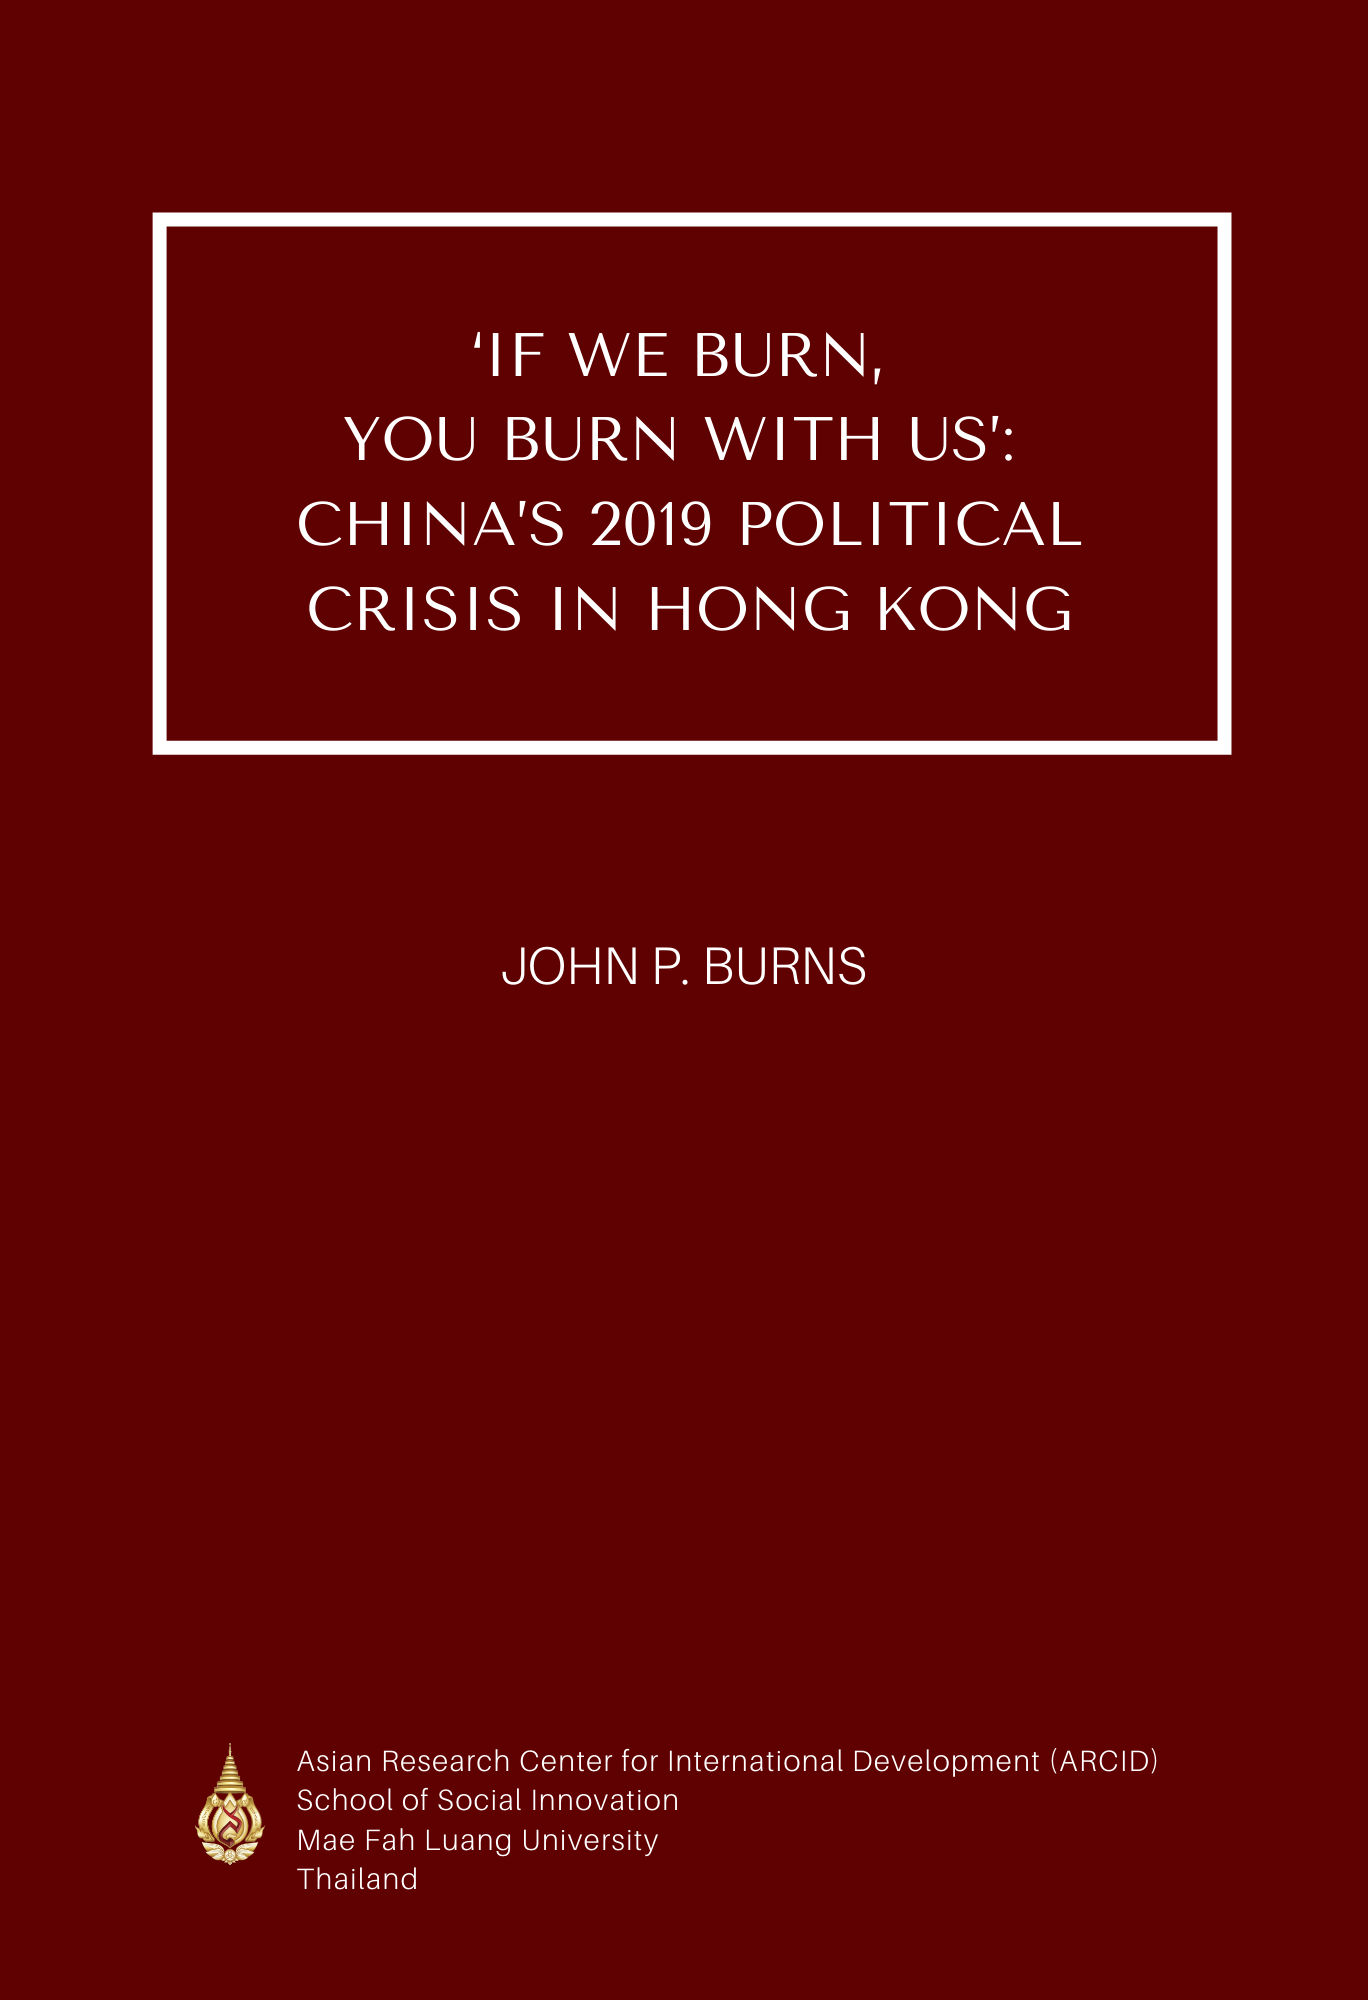 IF WE BURN, YOU BURN WITH US': CHINA'S 2019 POLITICAL CRISIS IN HONG KONG